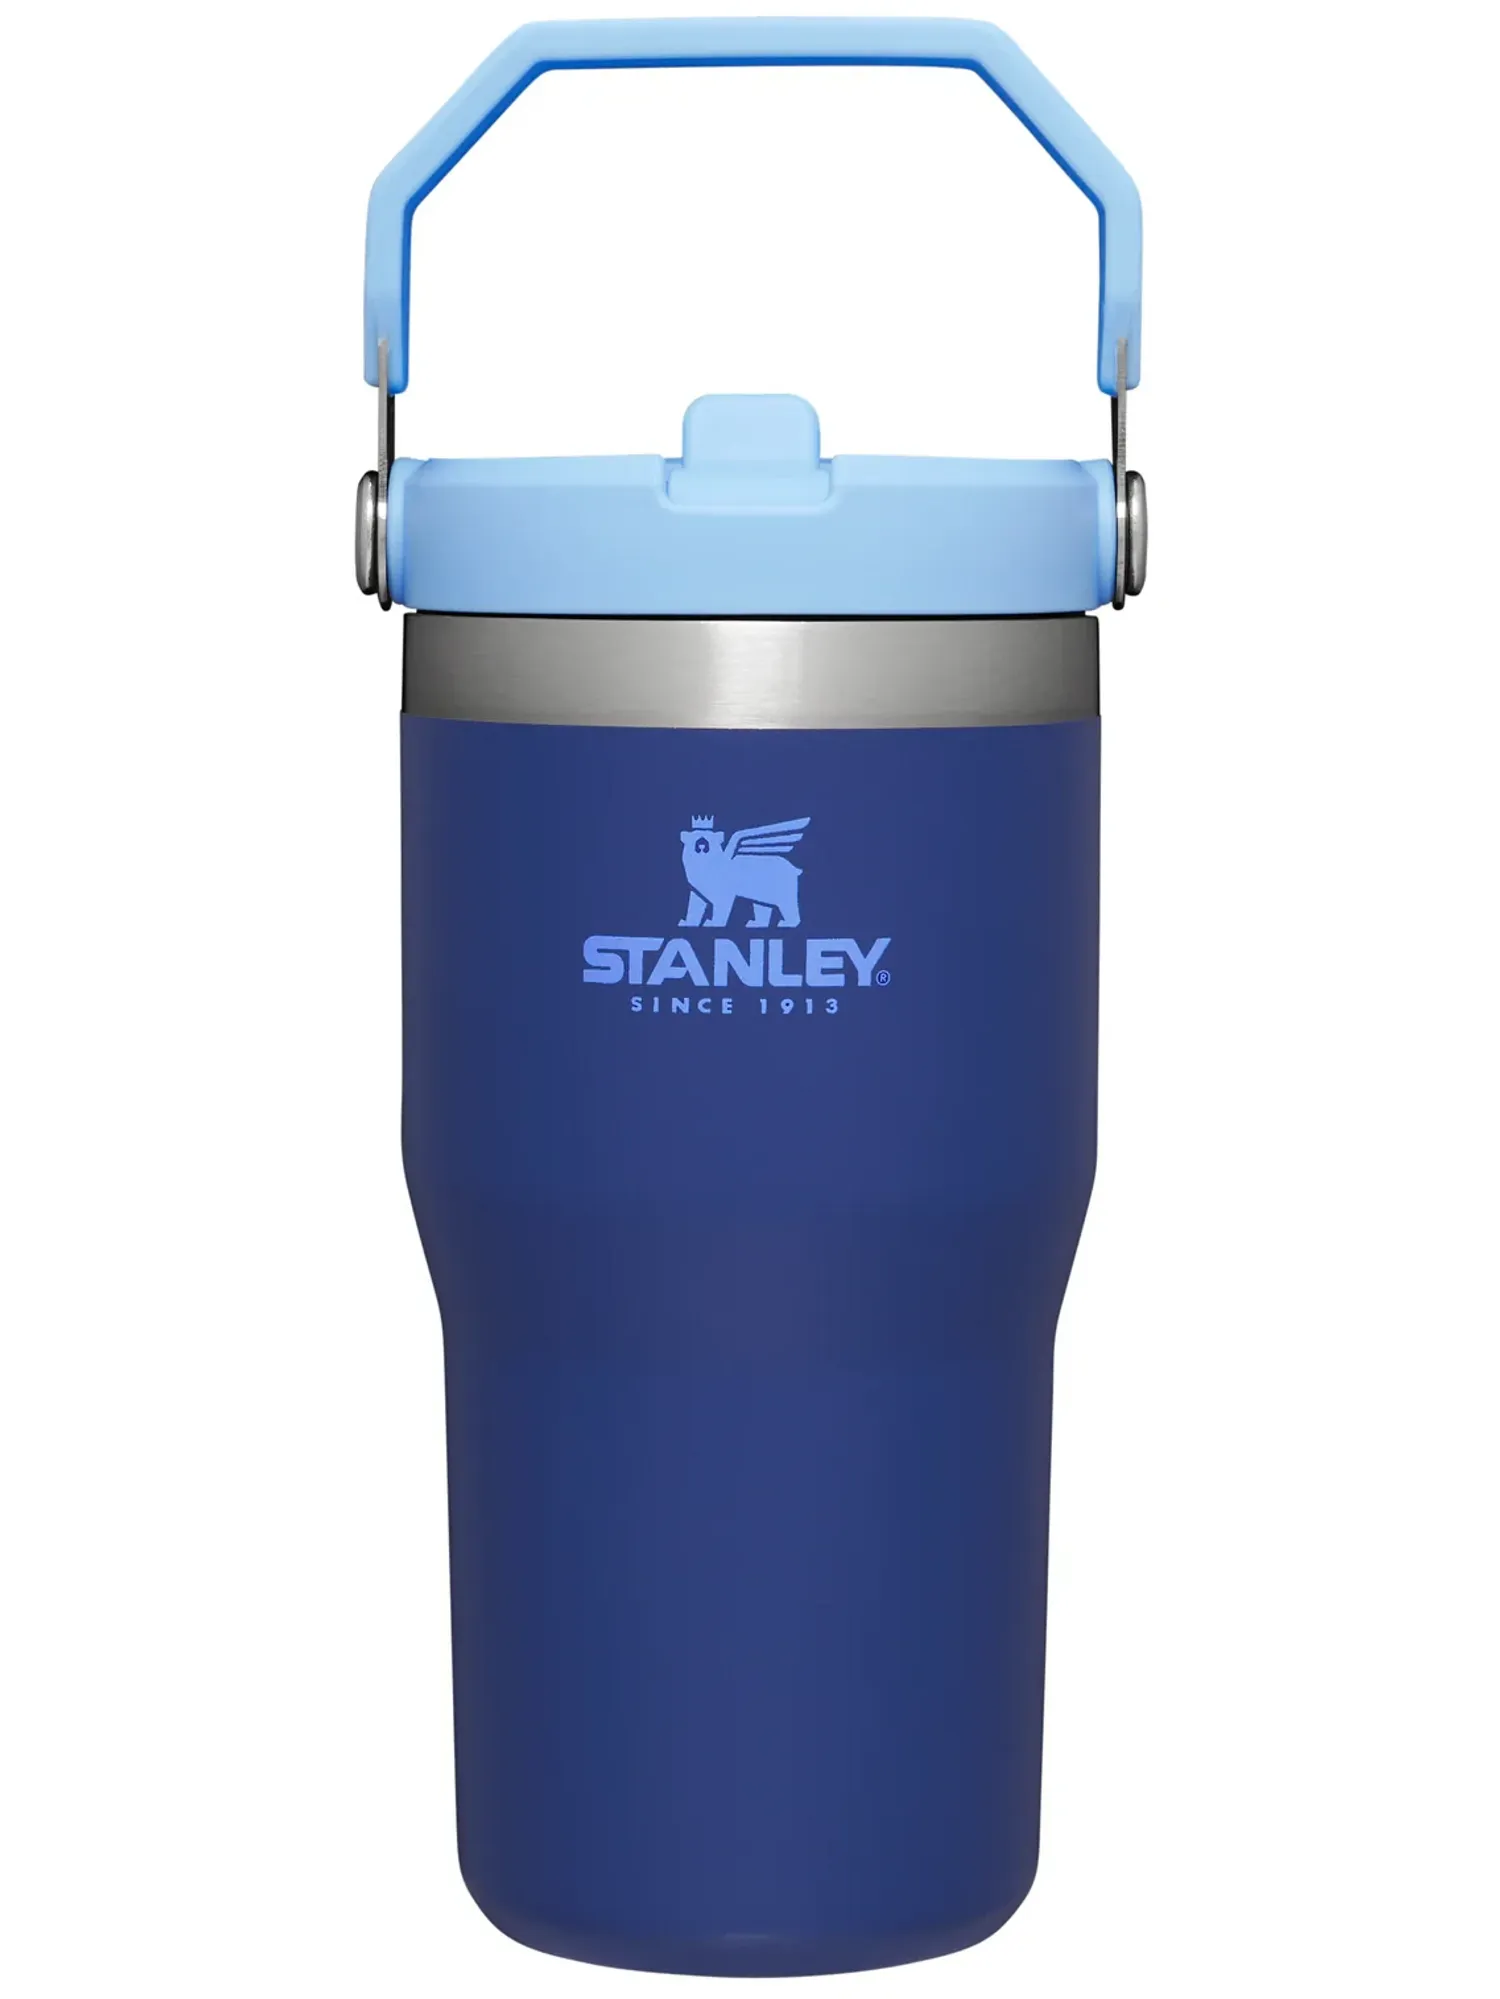 blue, durable Stanley tumbler